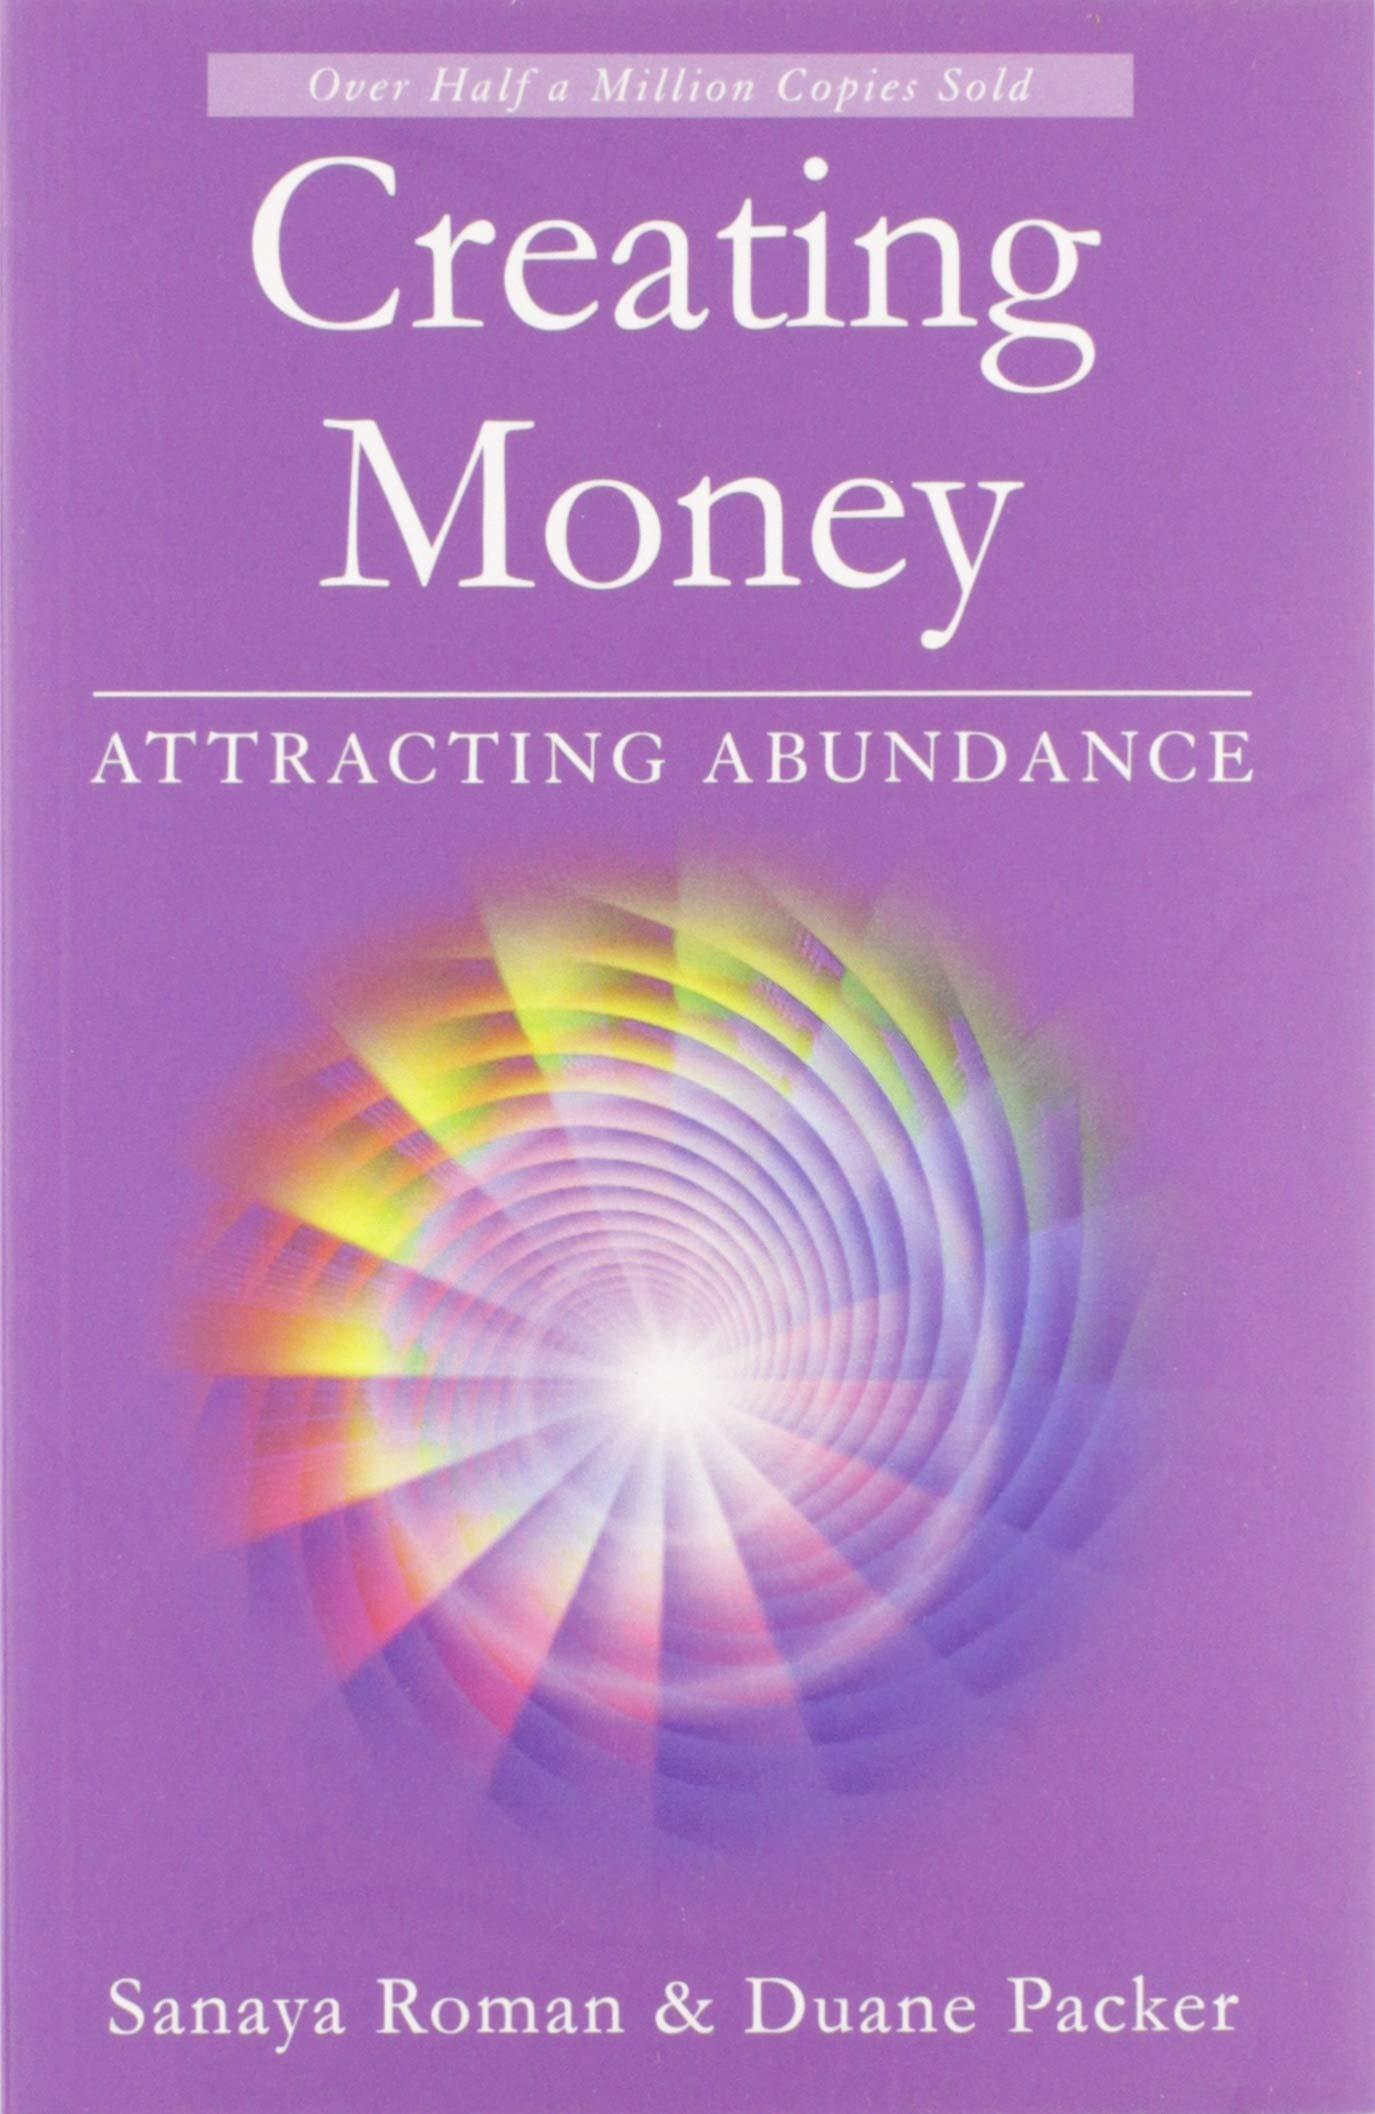 creating money attracting abundance 1st edition sanaya roman, duane packer 1932073221, 978-1932073225